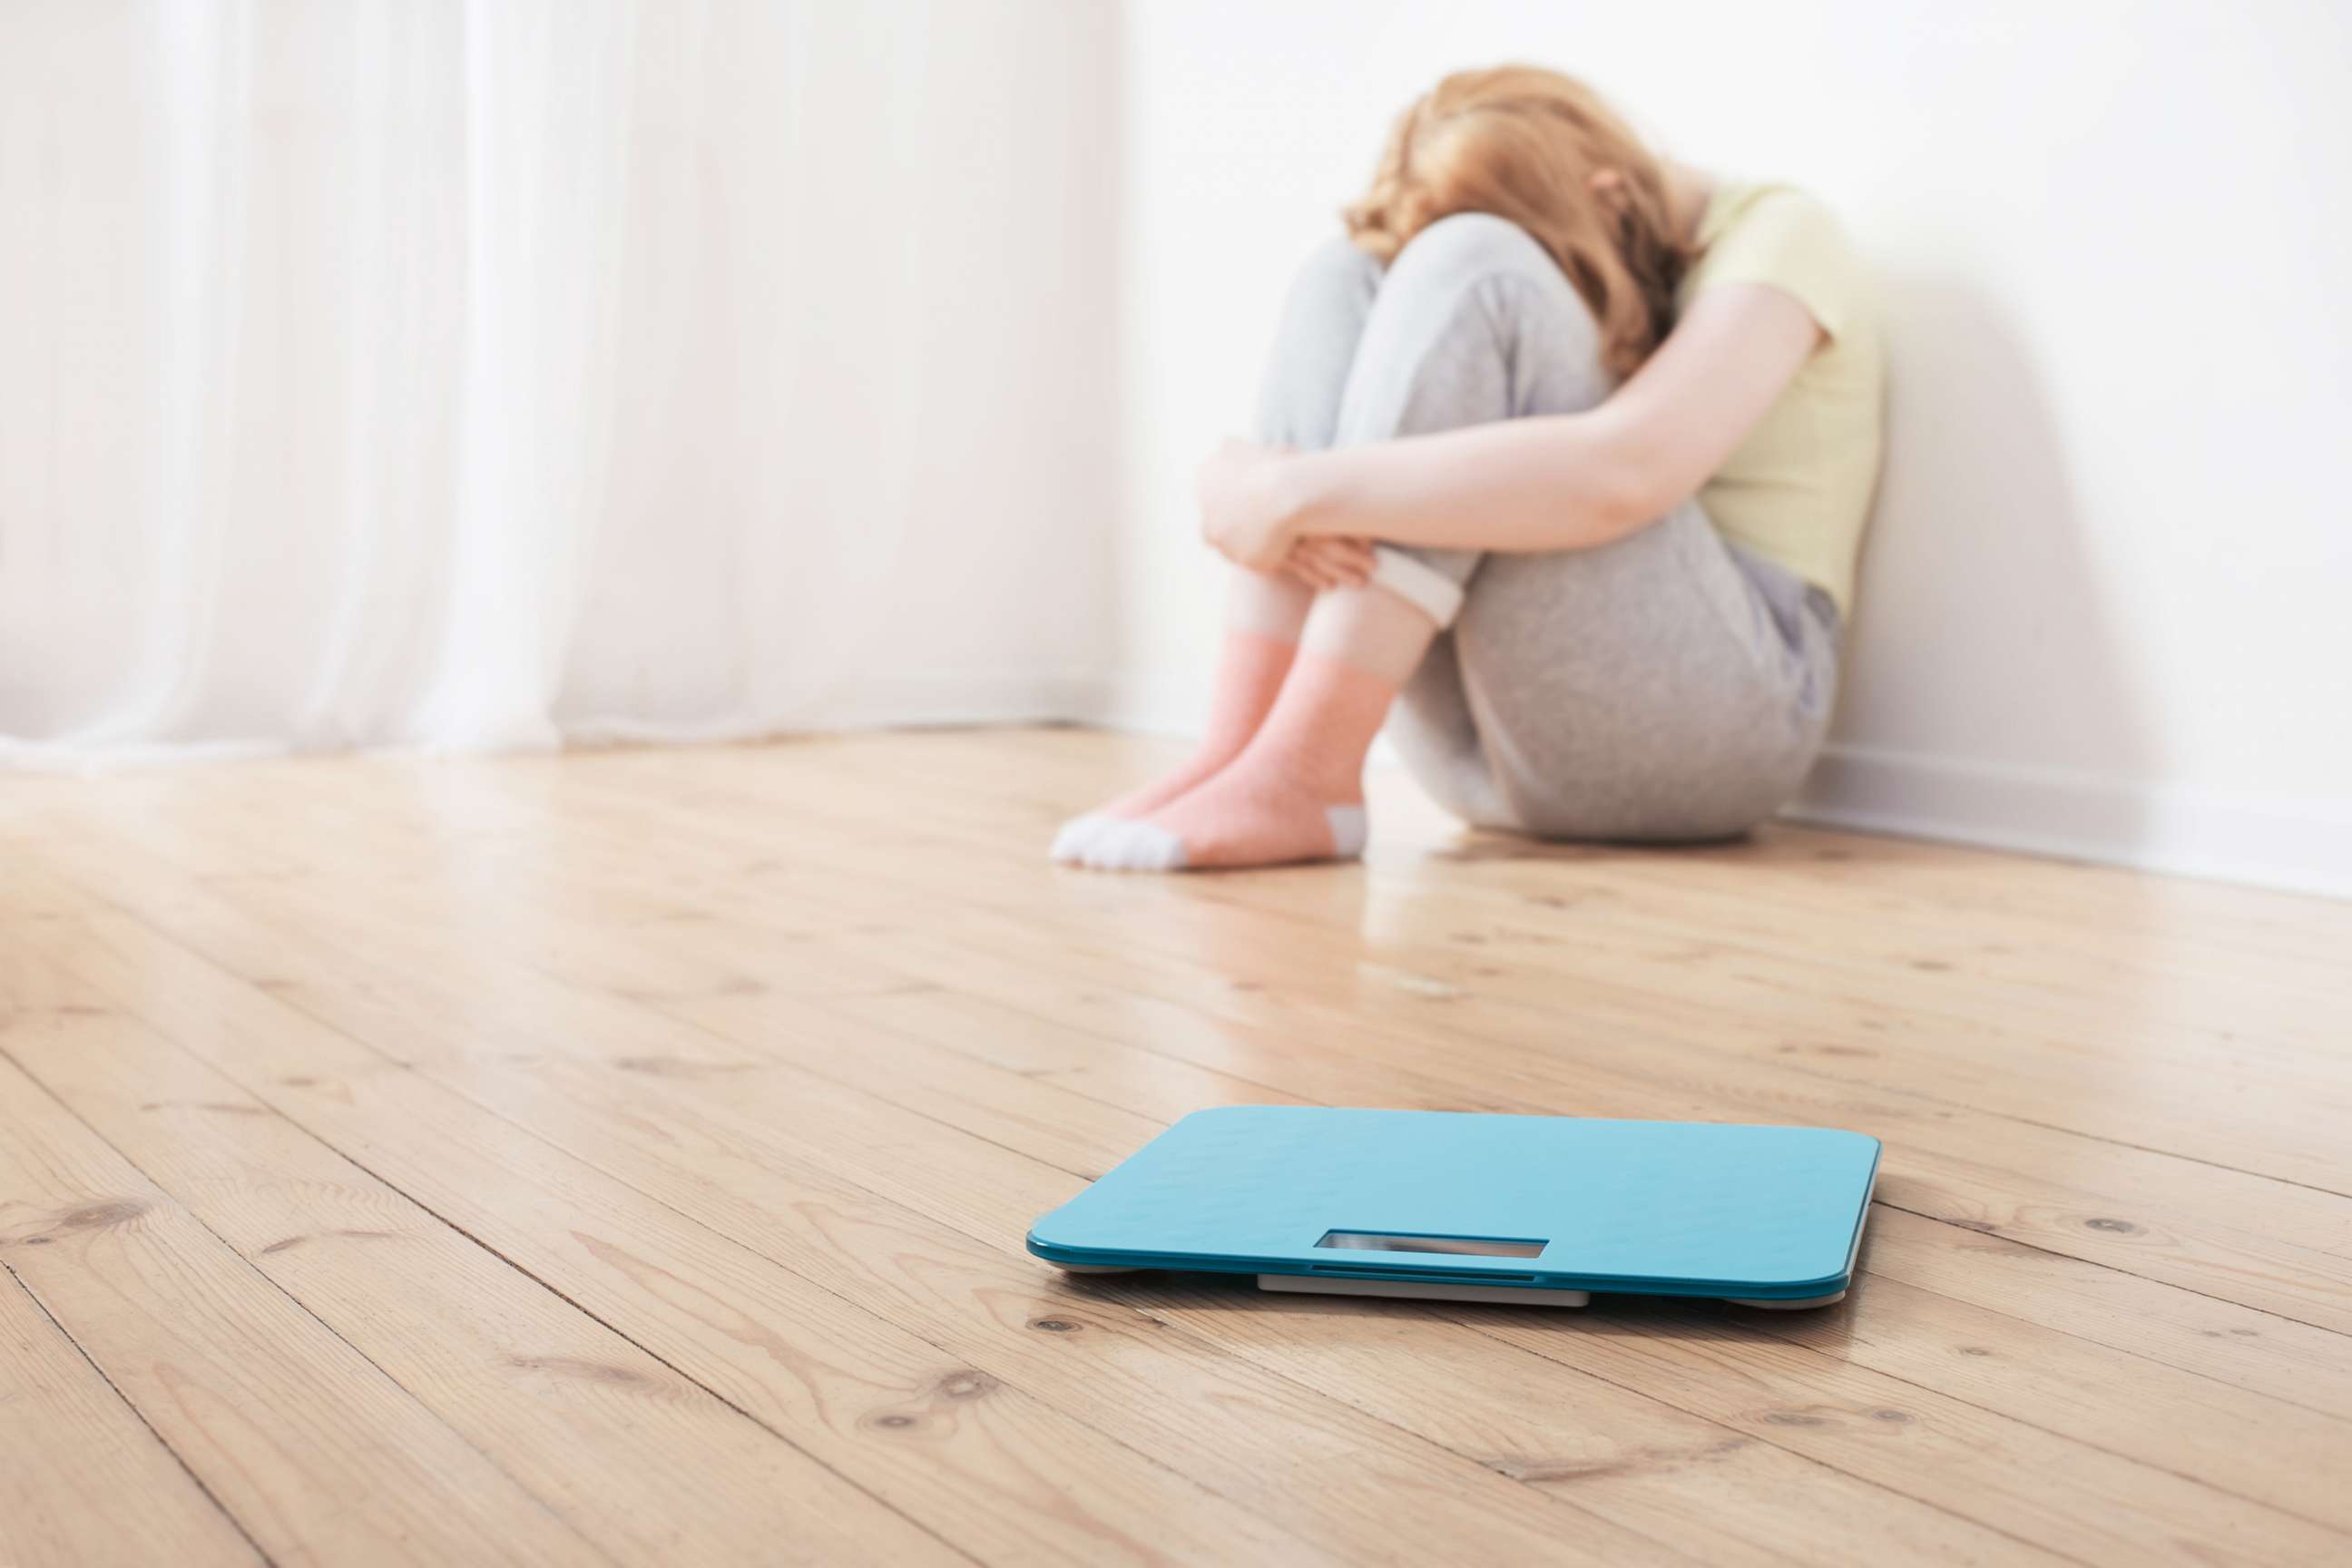 PHOTO: sad teenager girl with scale on wooden floor